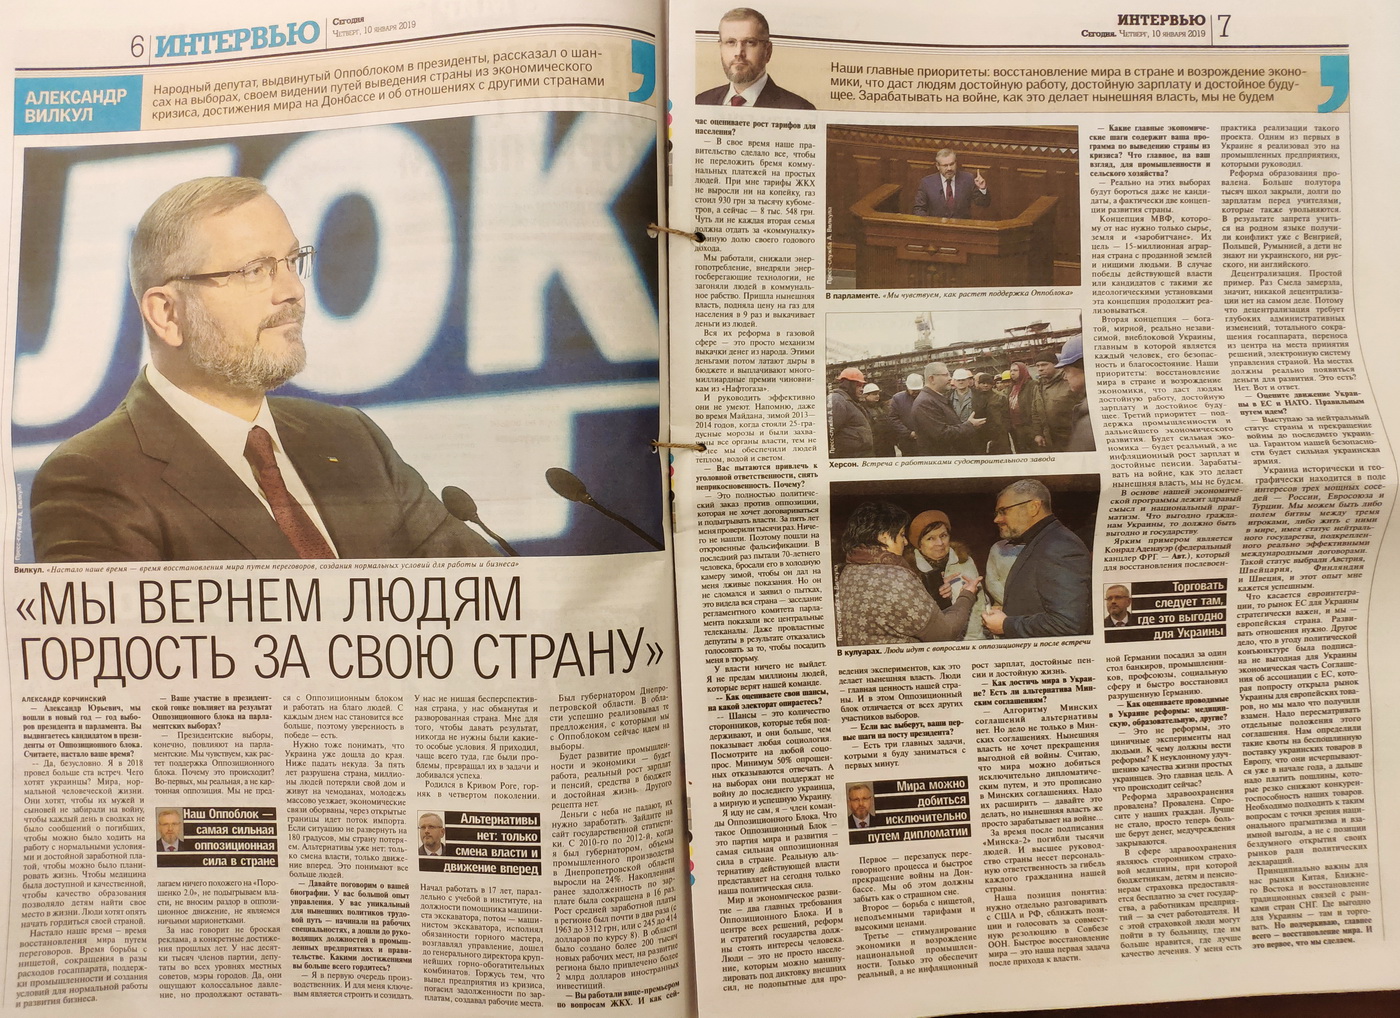 28 01 2019 Kyiv gazety dzynsa vilkul1